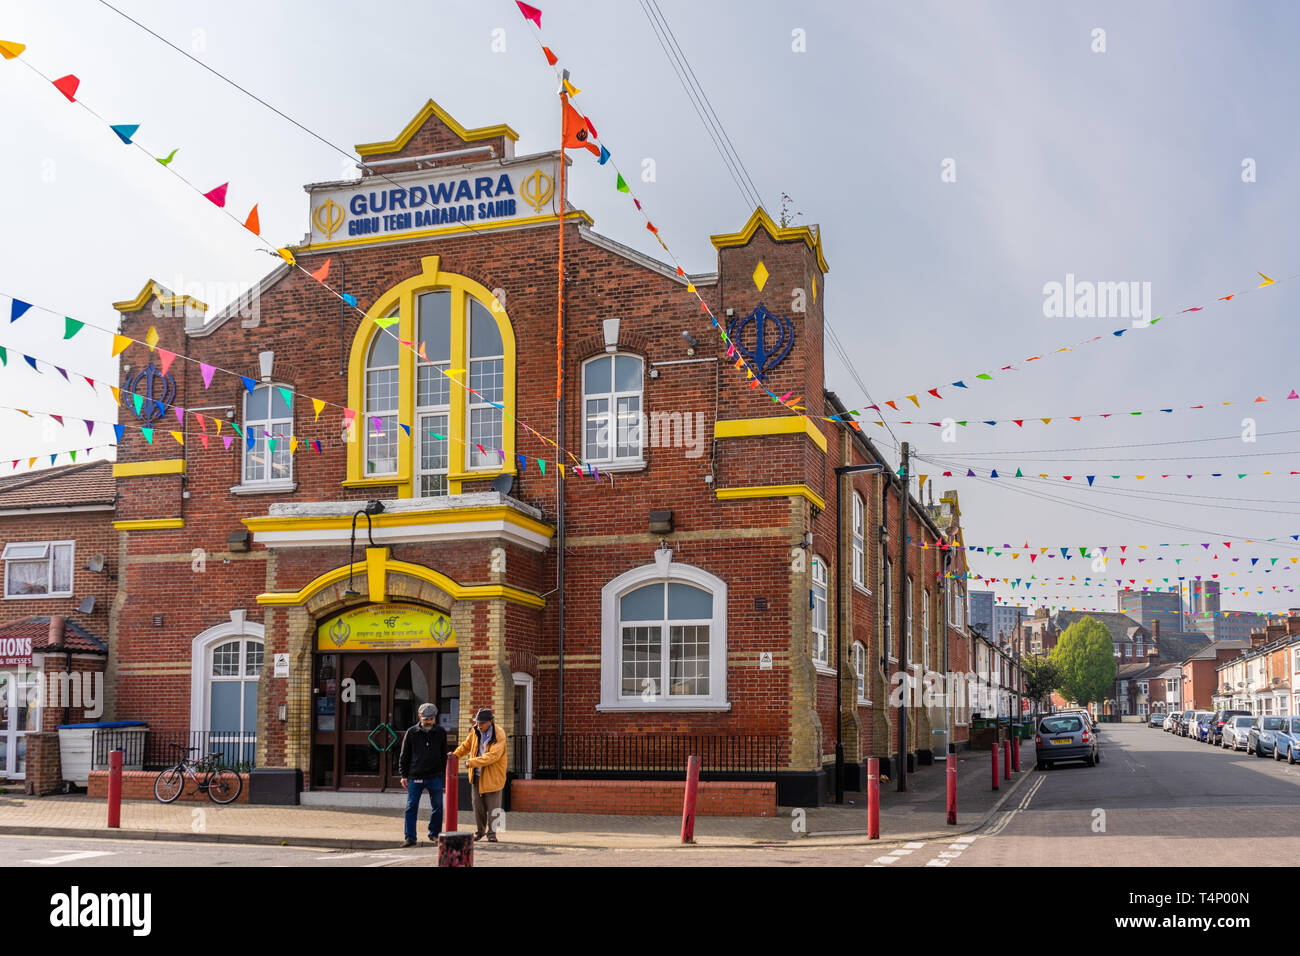 Gurdwara Guru Tegh Bahadar Sahib Ort der Anbetung entlang St Marks Road im Stadtteil Northam in Southampton, England, Großbritannien Stockfoto